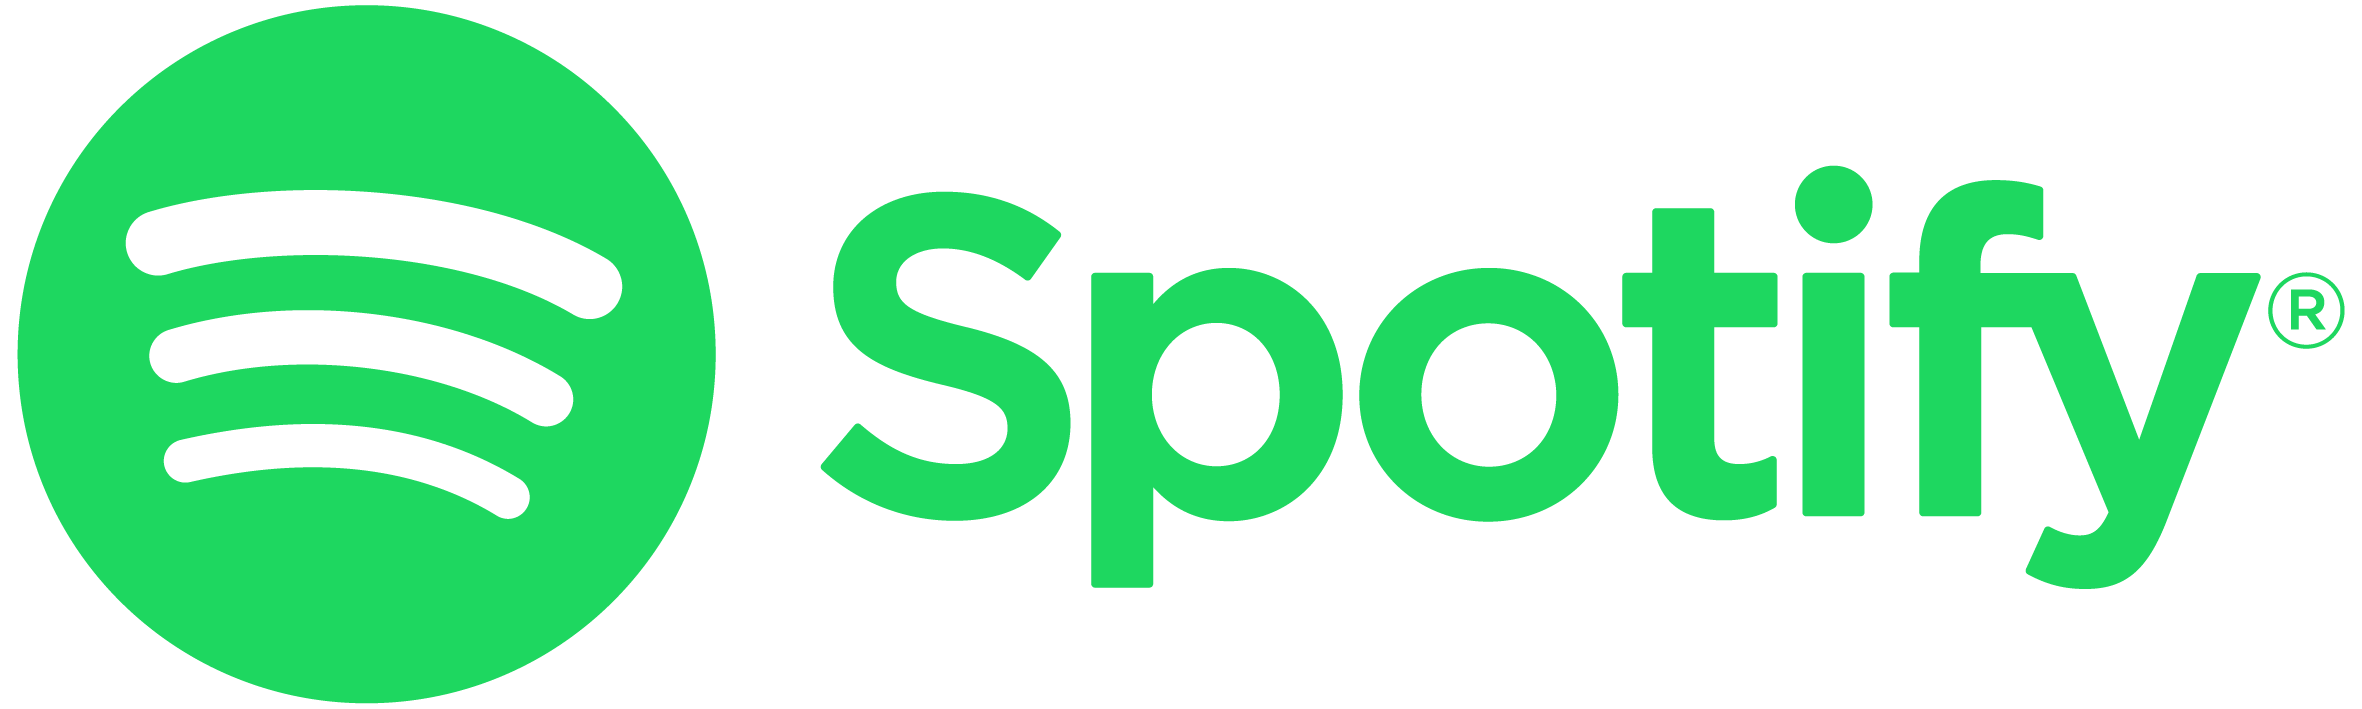 Mopidy-Spotify logo